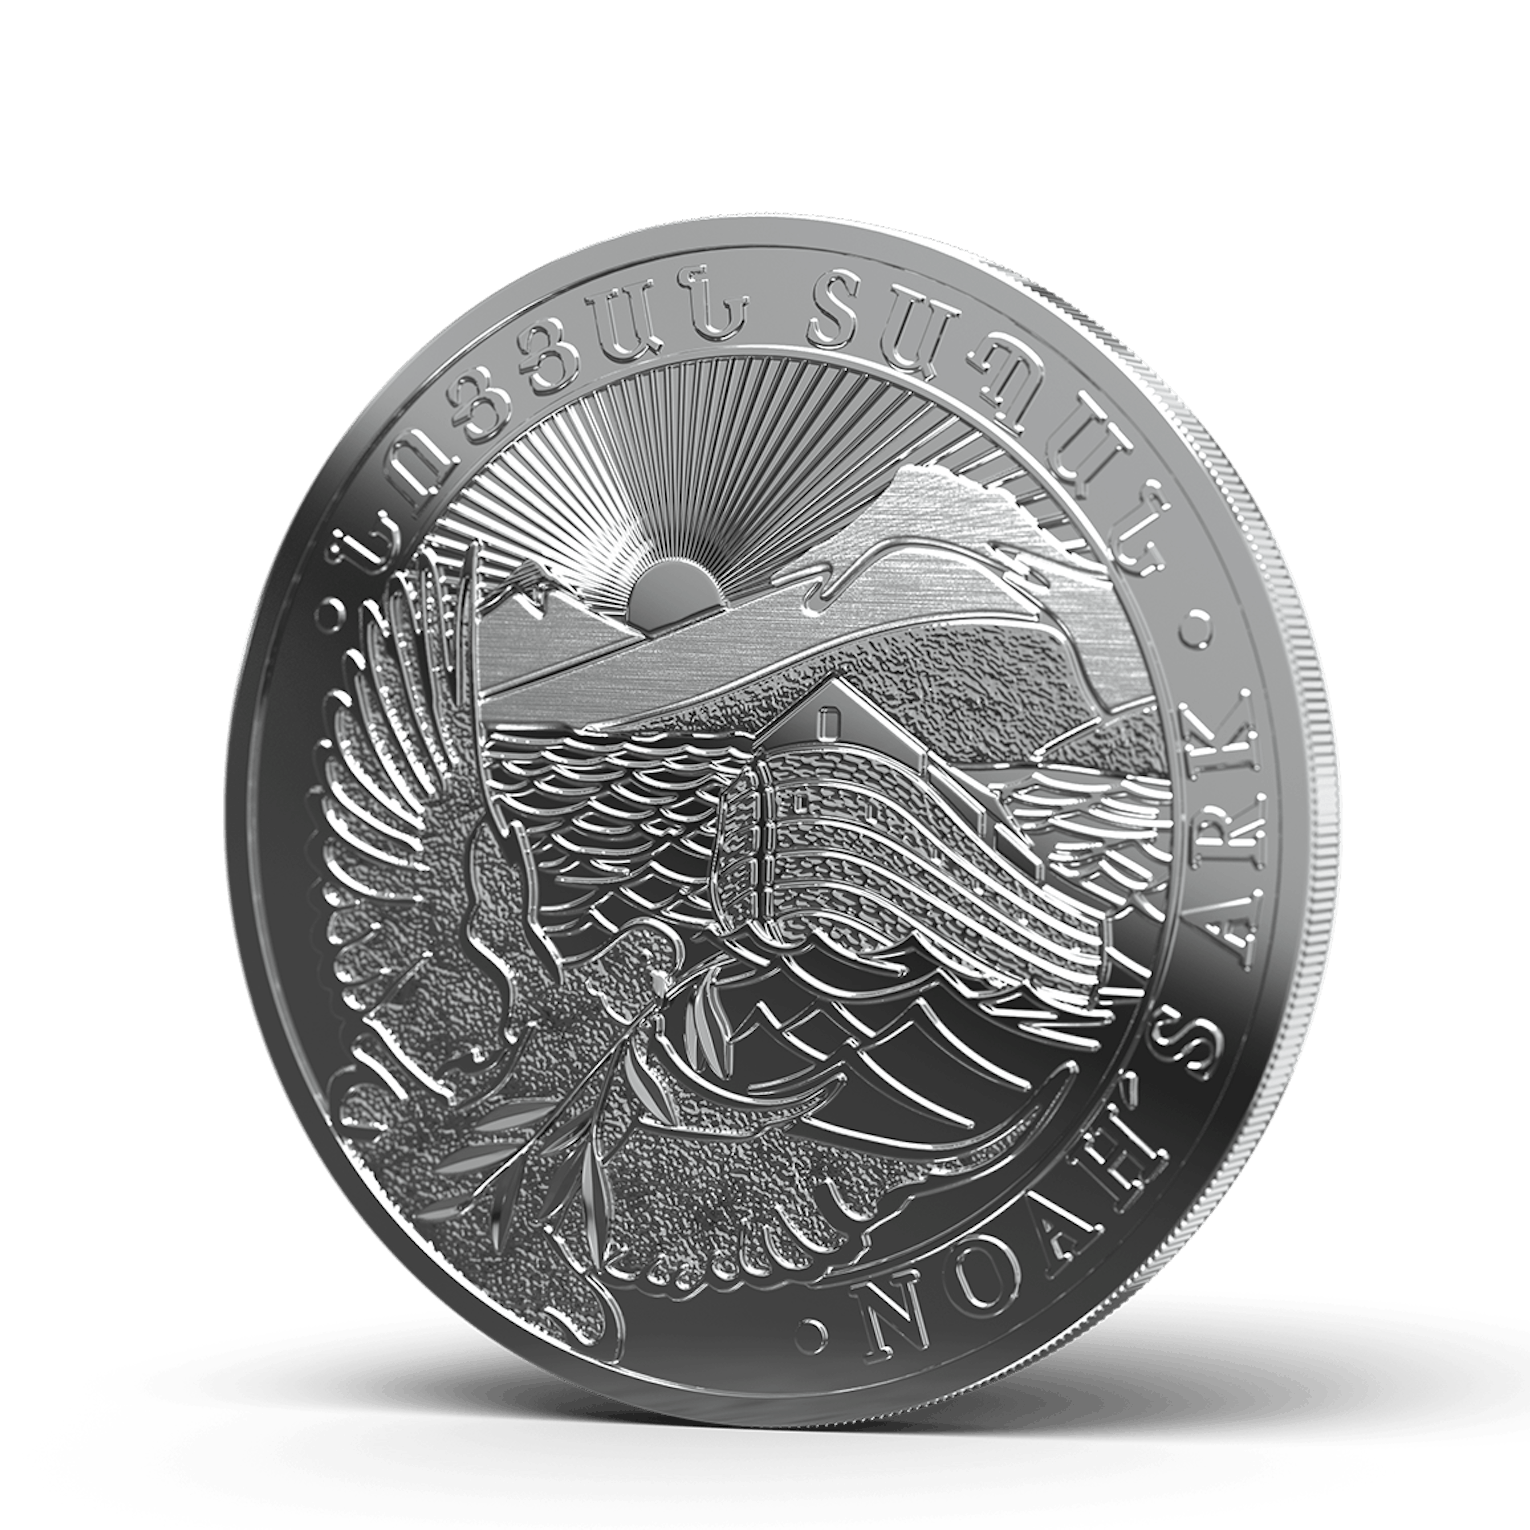 Noah's Ark silver bullion coin: Exclusive, European bullion coin in fine silver.